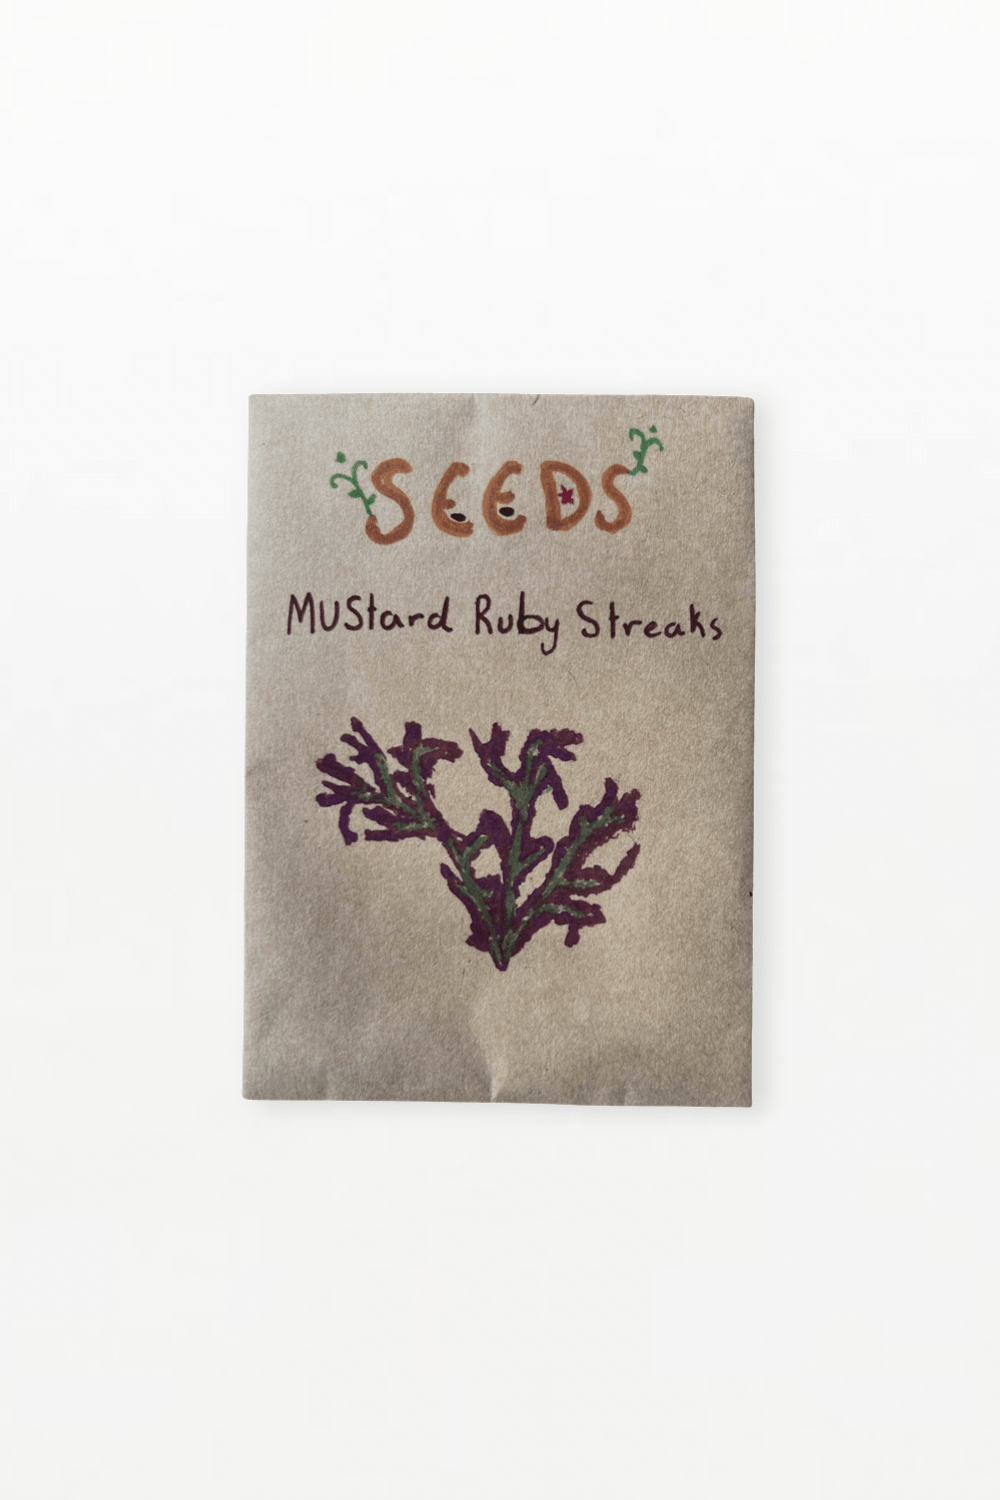 Bush Organics Seeds - Mustard Ruby Streaks - Ensemble Studios